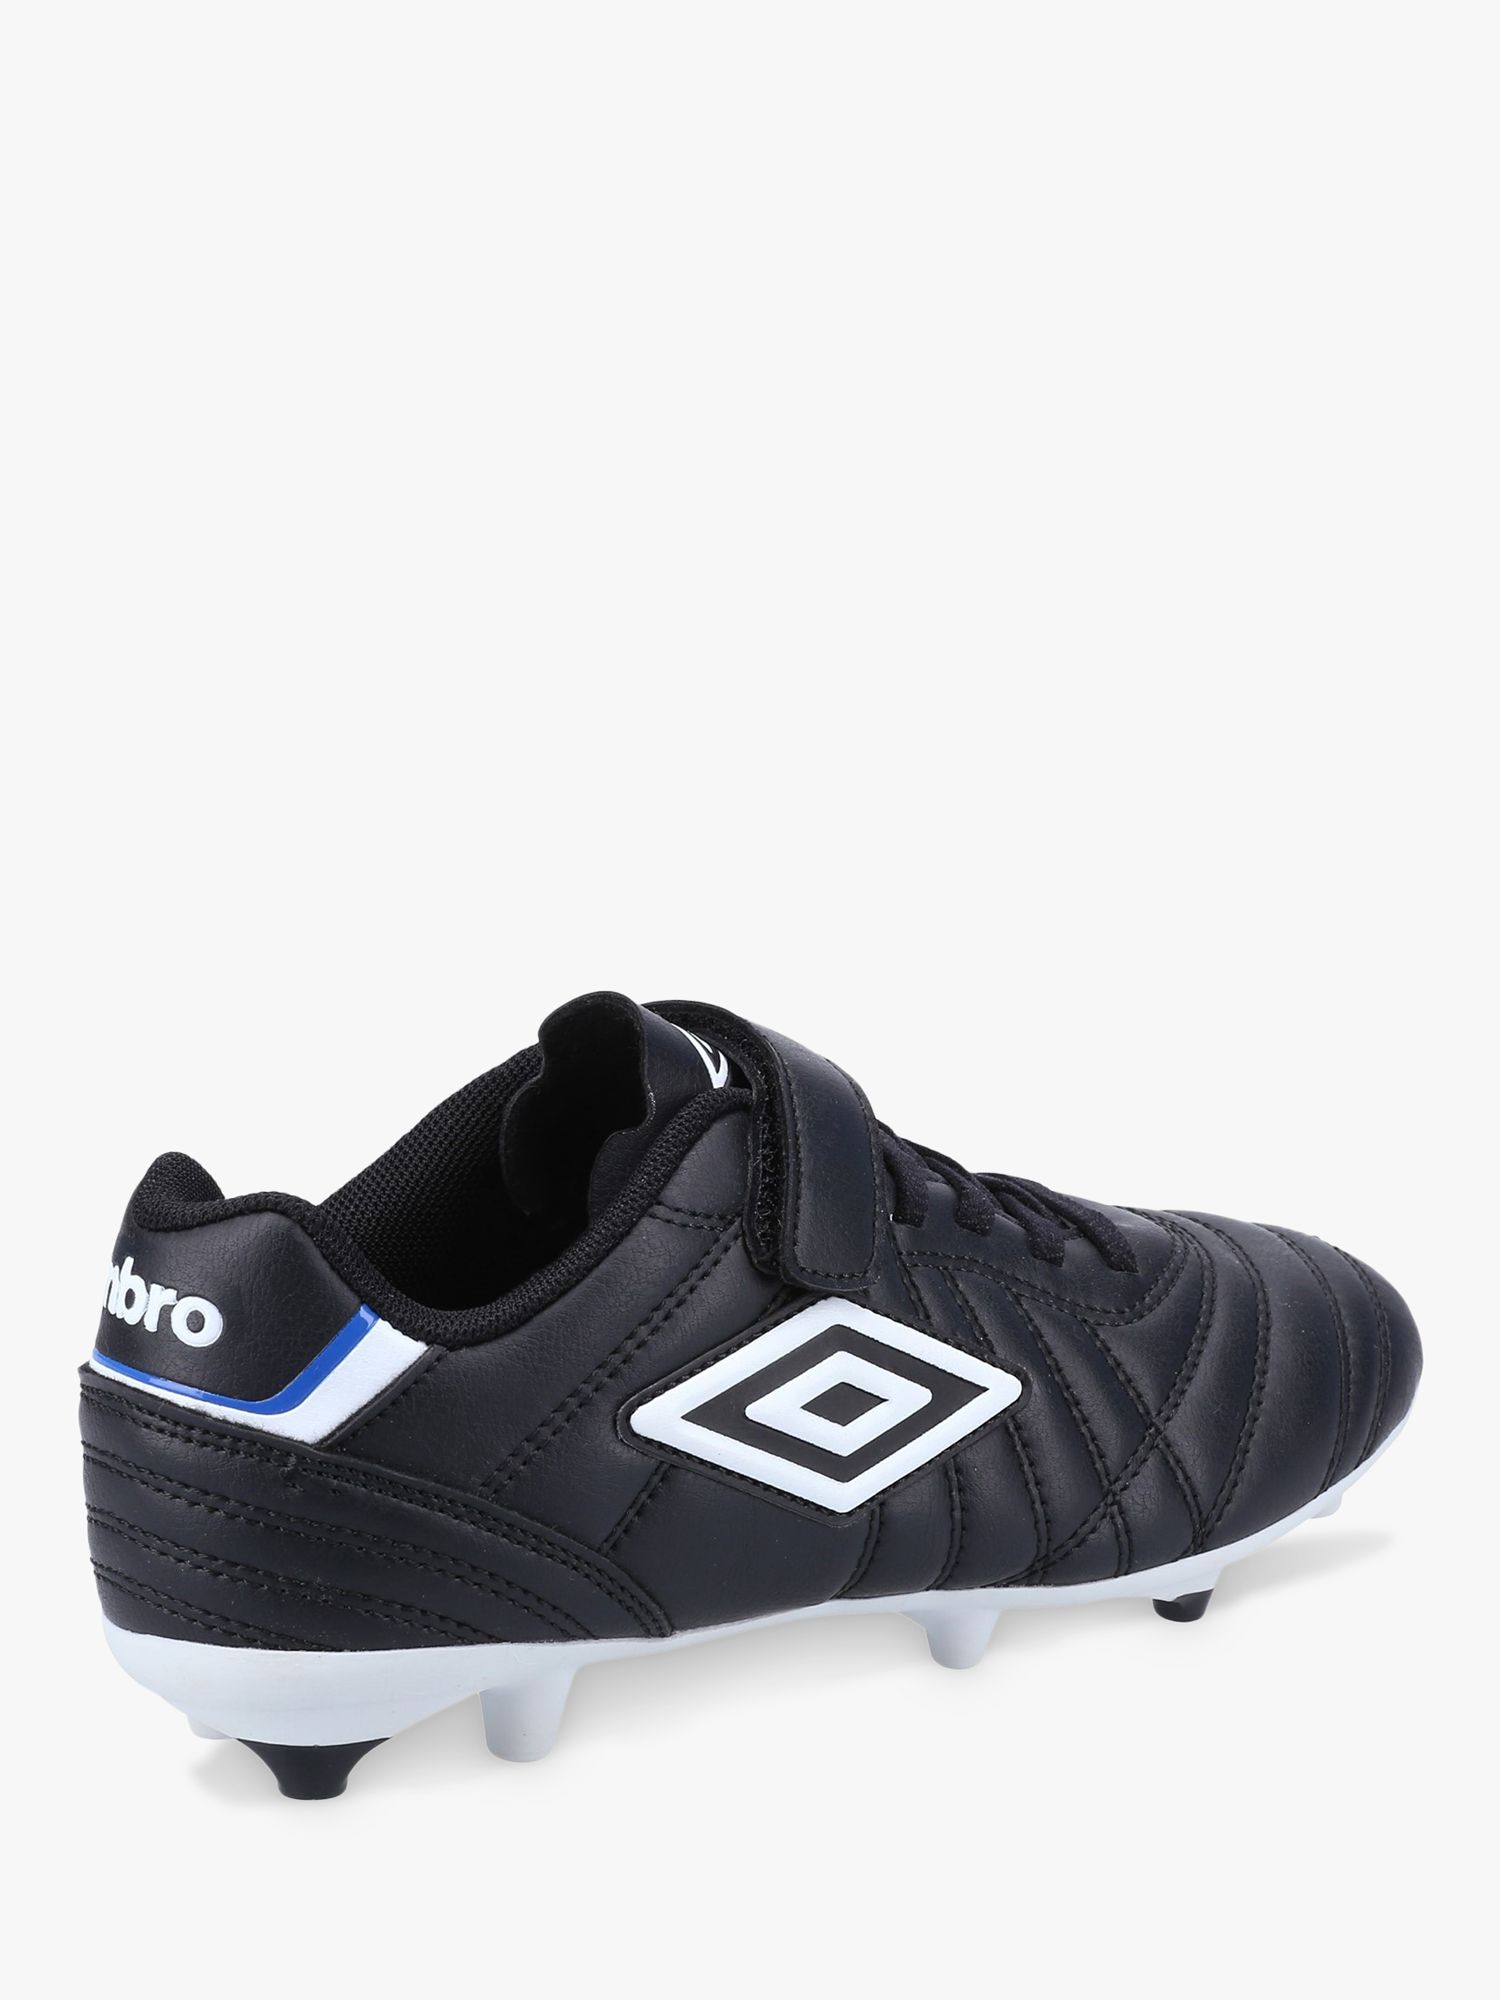 Umbro Speciali Liga Firm Ground Football Boots, Black/White at John ...